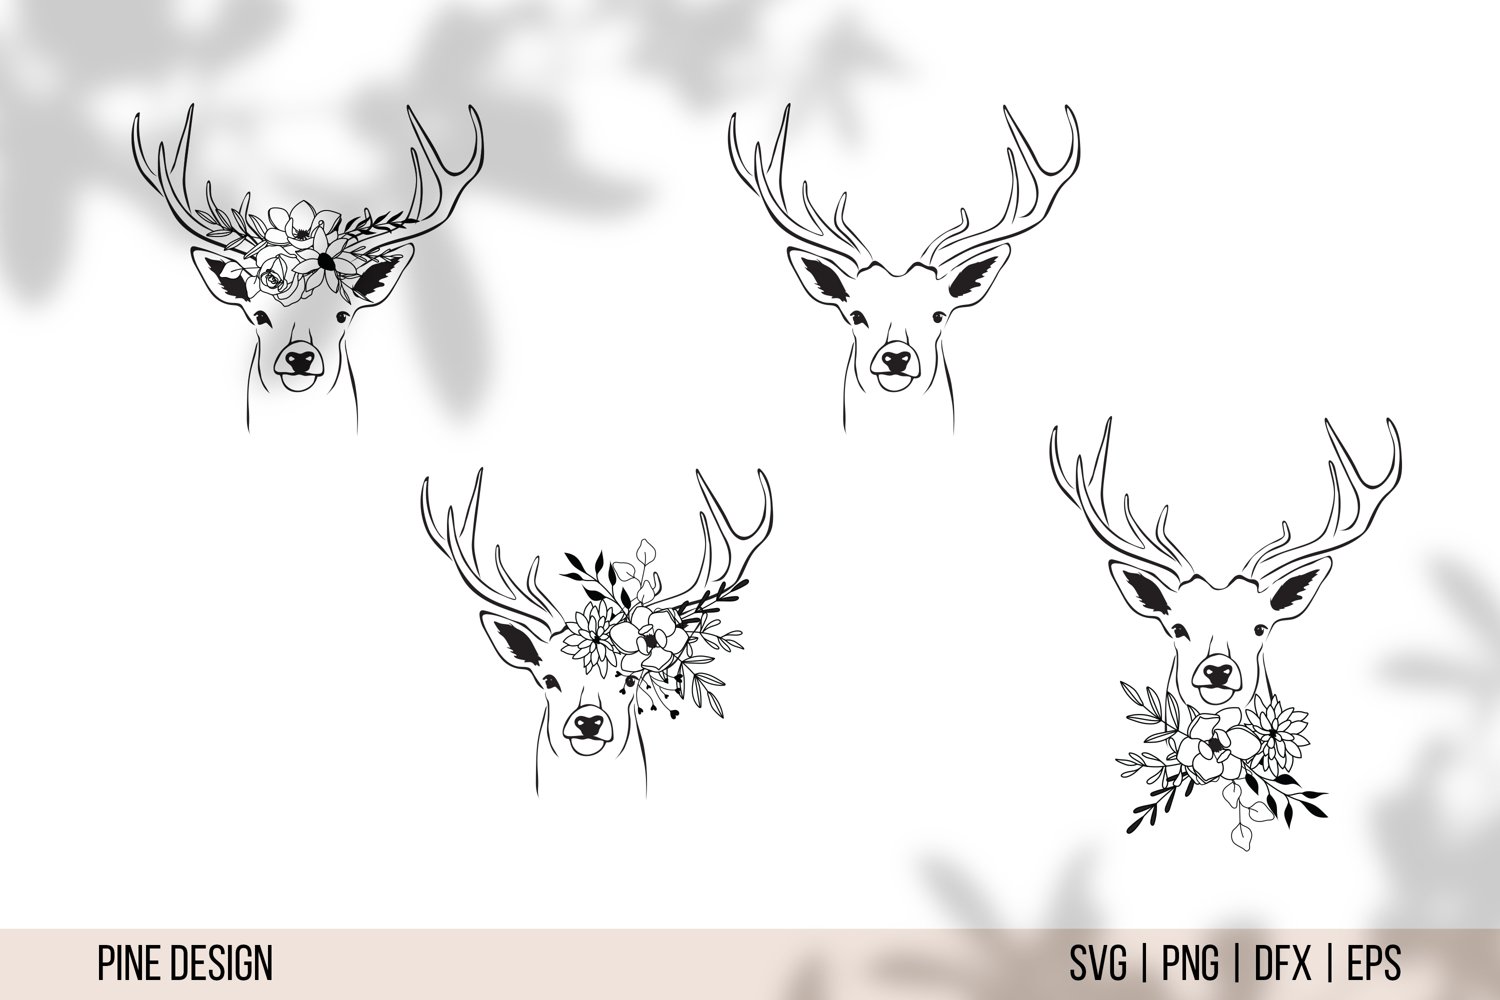 Three deer heads with flowers in their antlers.